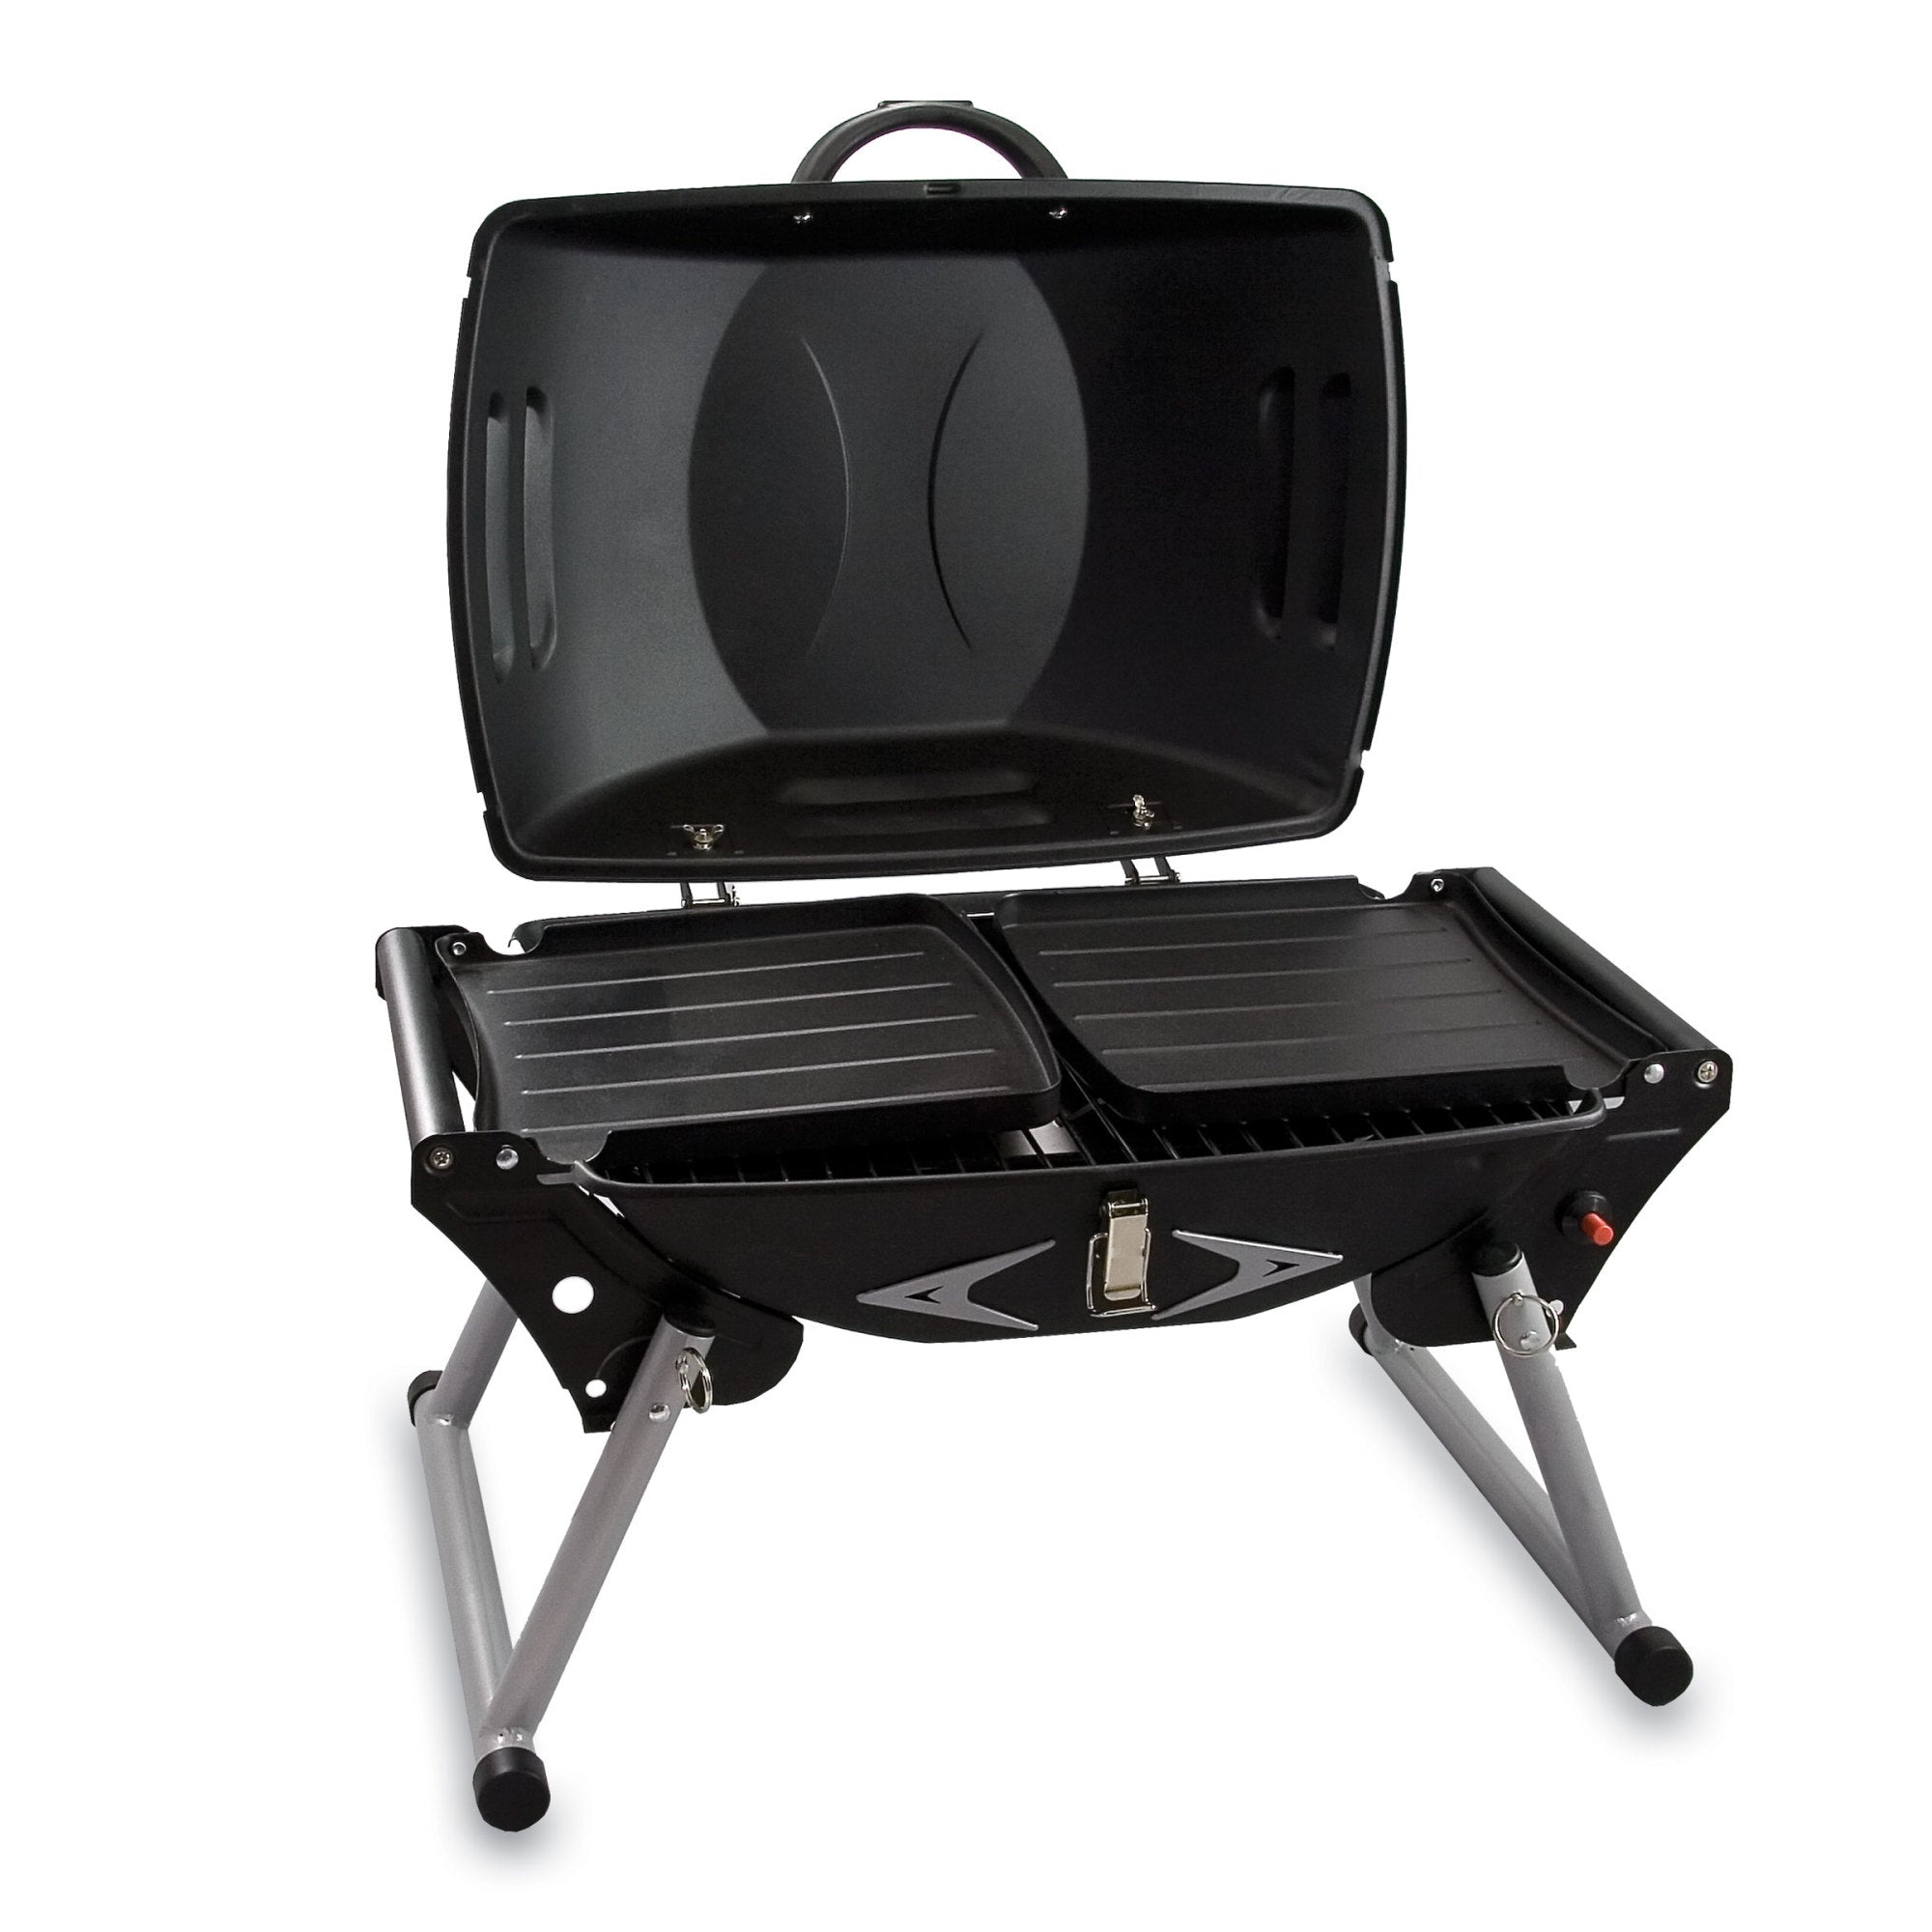 Portagrillo Portable Propane BBQ Grill - Compact & Efficient